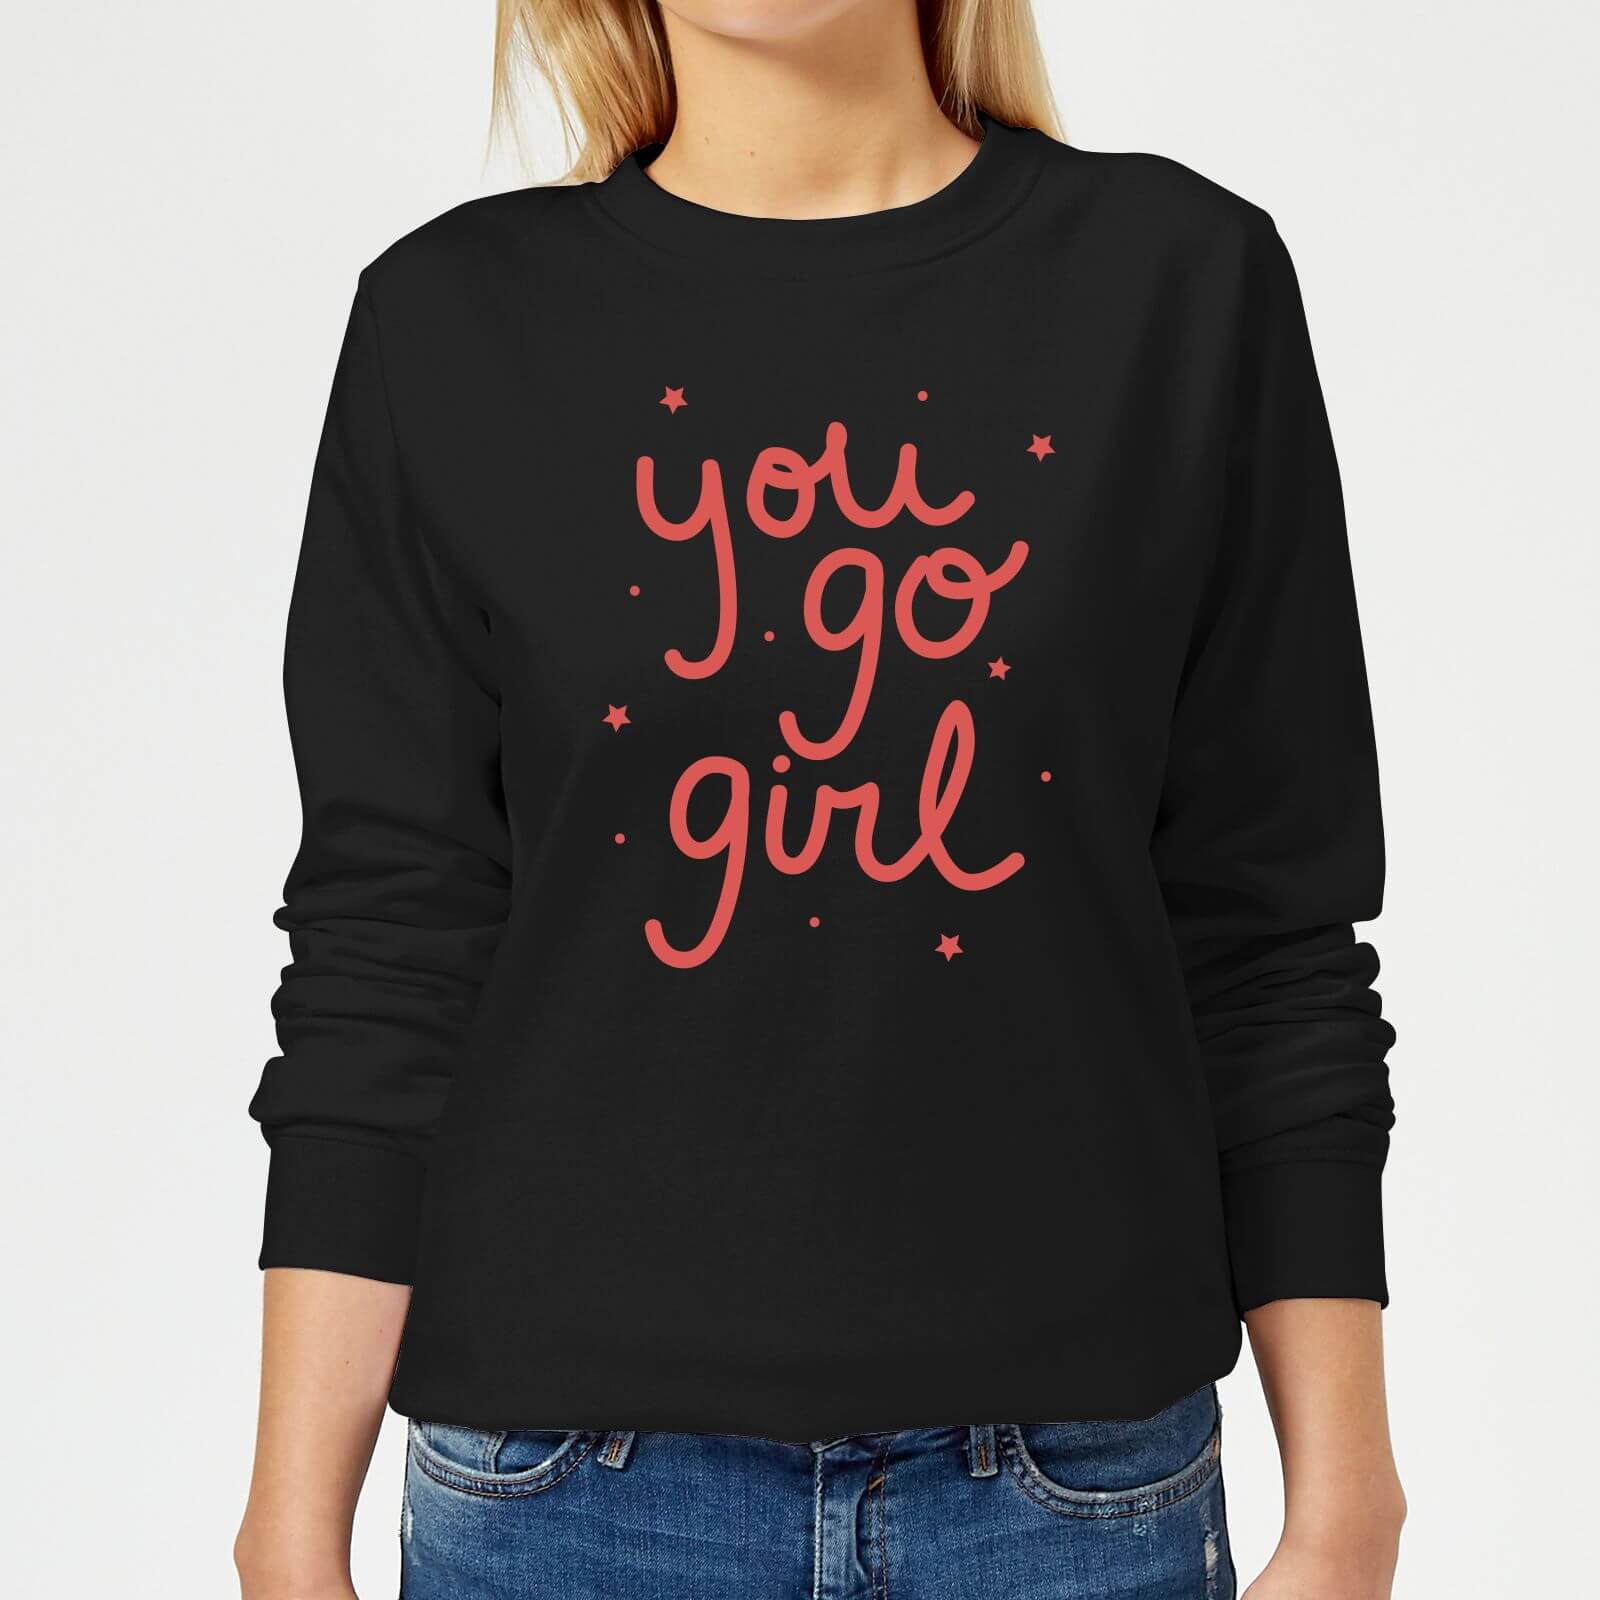 You Go Girl Women's Sweatshirt - Black - XS - Black